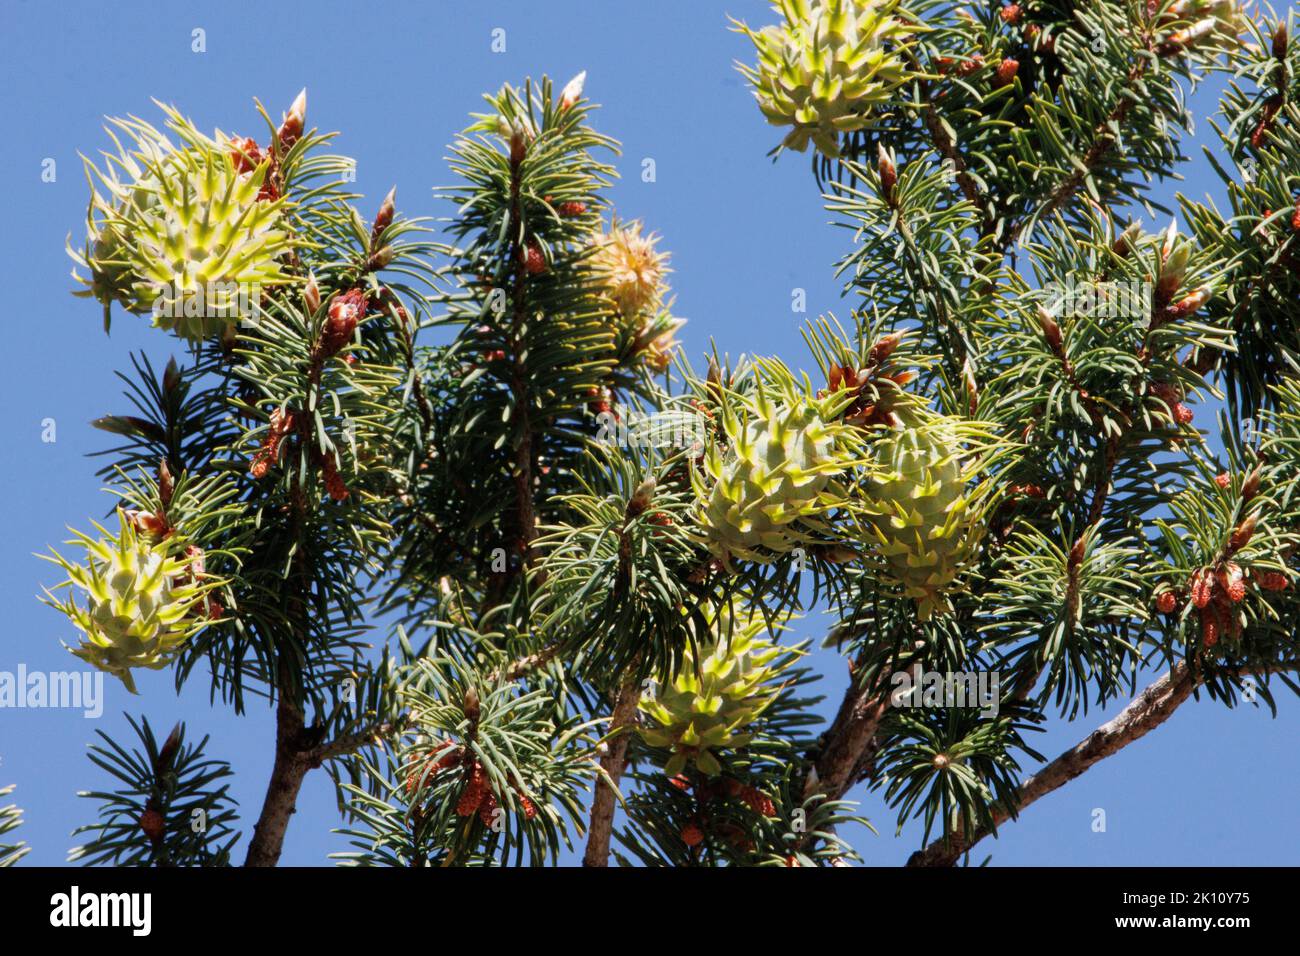 Green immature megastrobilus ovulate cones of Pseudotsuga Macrocarpa, Pinaceae, native tree in the San Rafael Mountains, Spring. Stock Photo